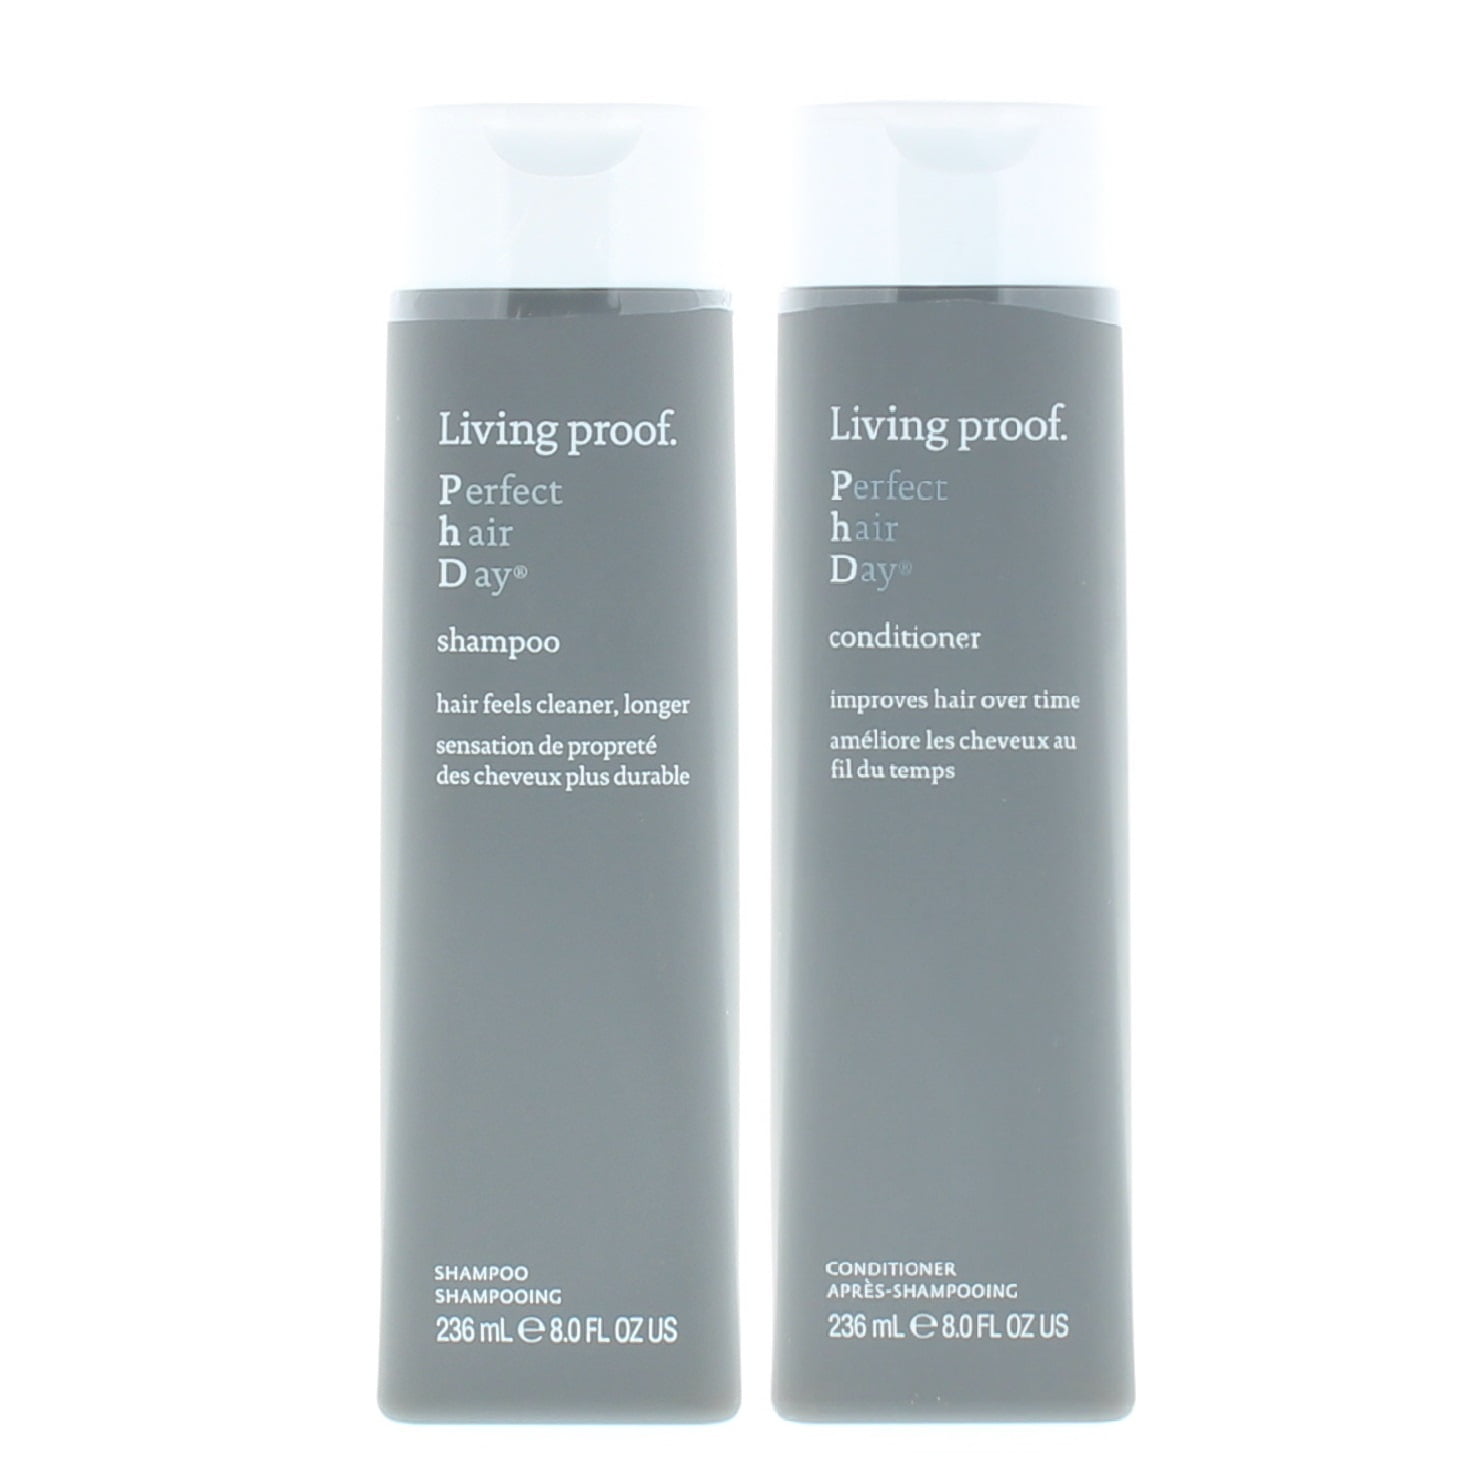 Bevel Moisturizing Shampoo for Textured Hair, 12 fl oz